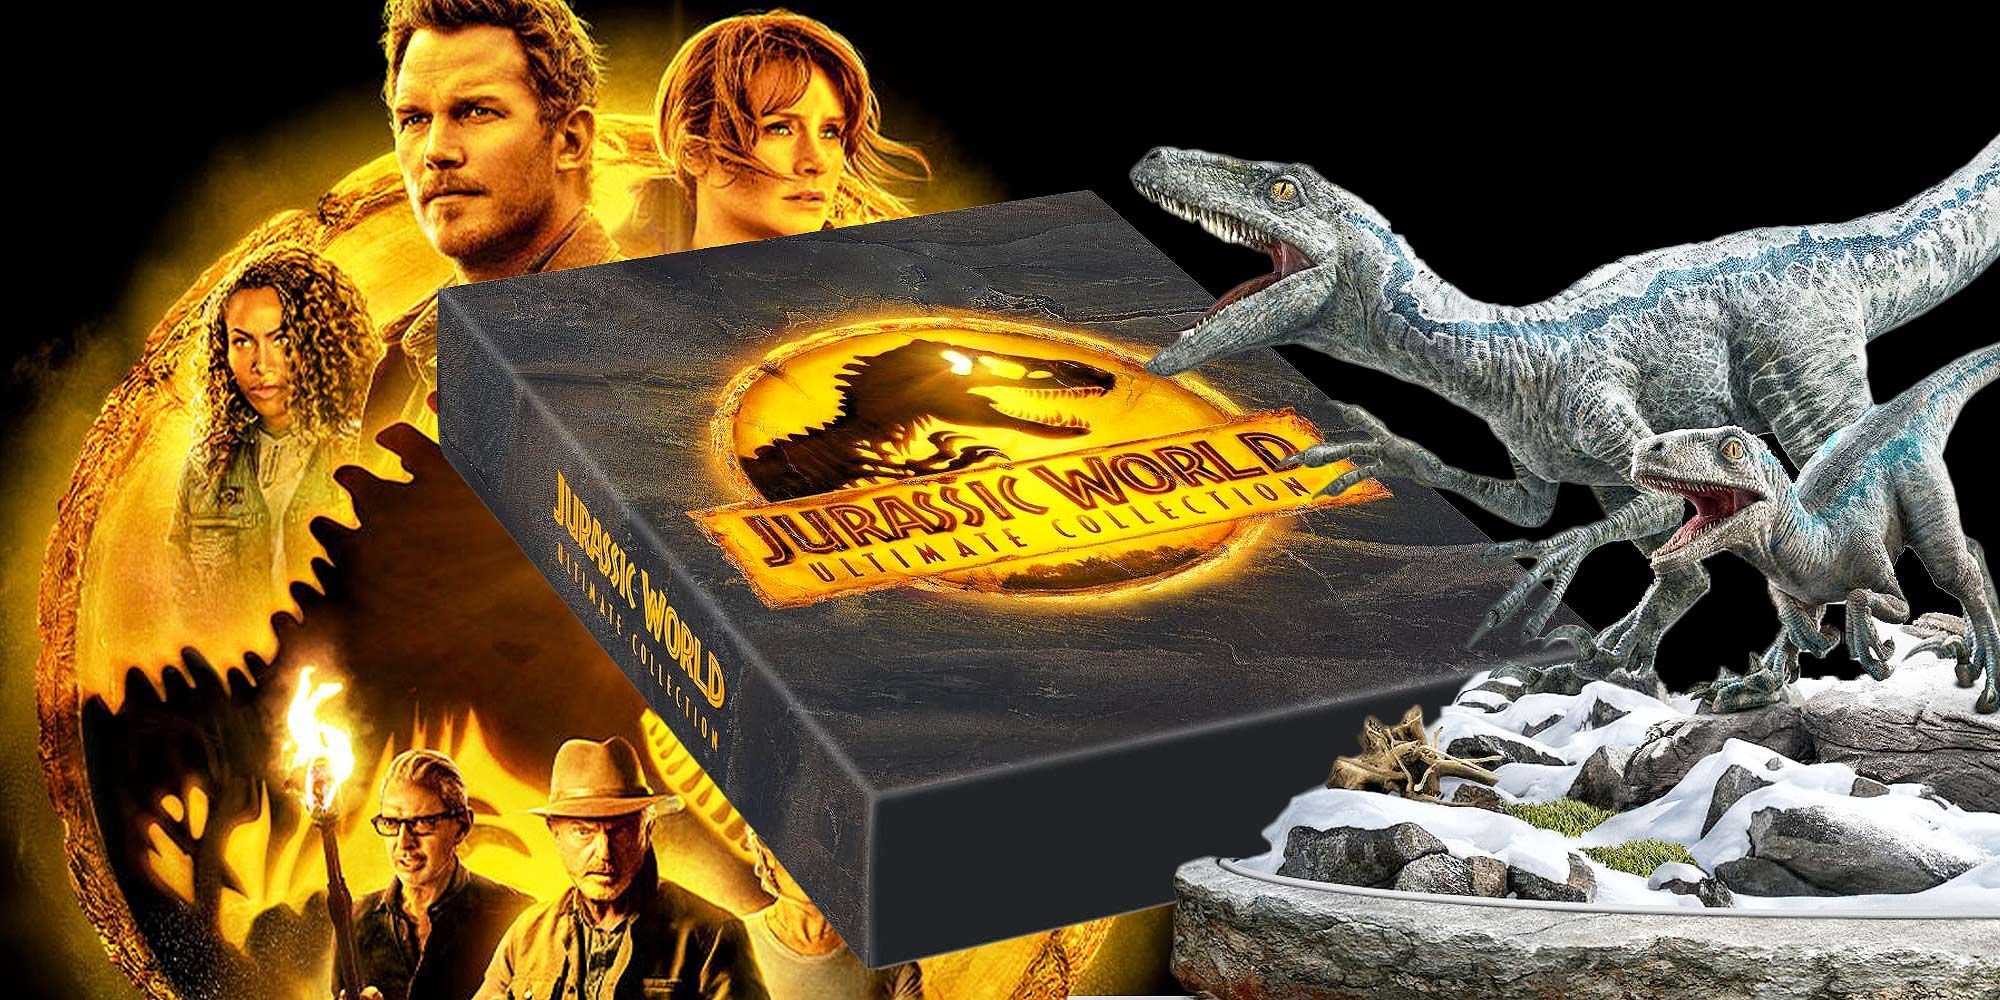 Jurassic World: Dominion download the last version for mac